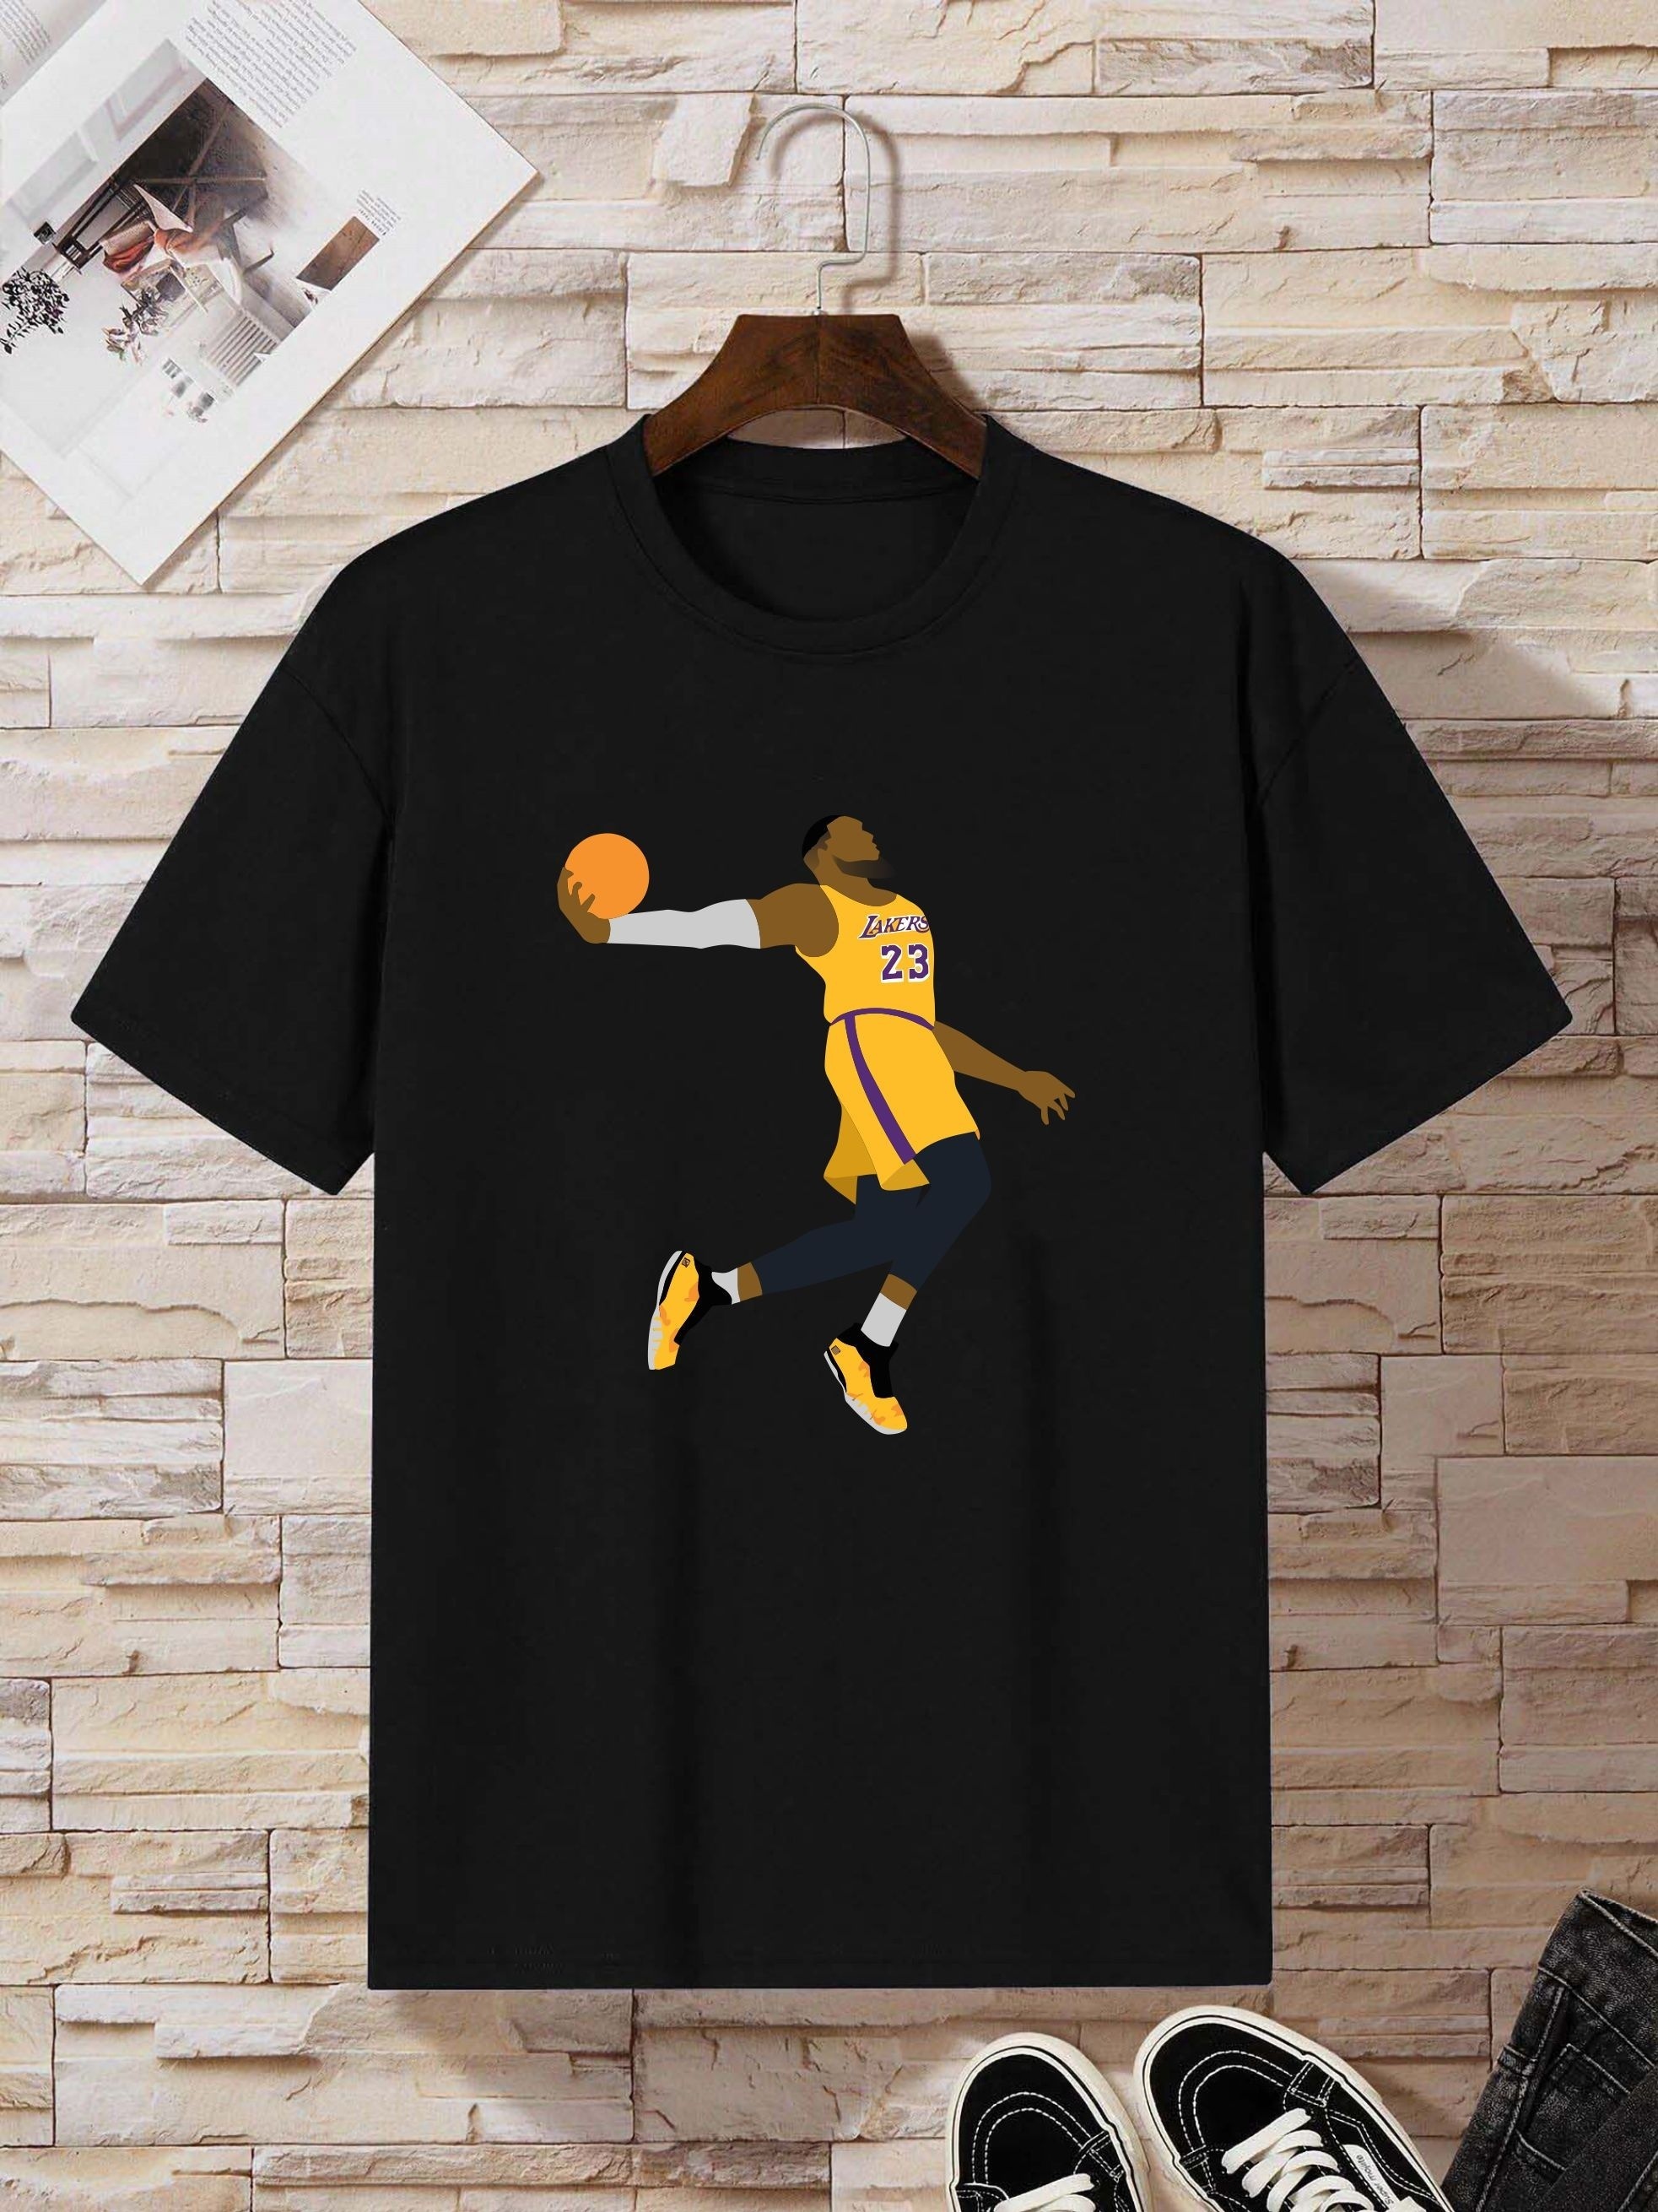 James Lakers #23 - Camisetas de baloncesto para hombre, estilo hip